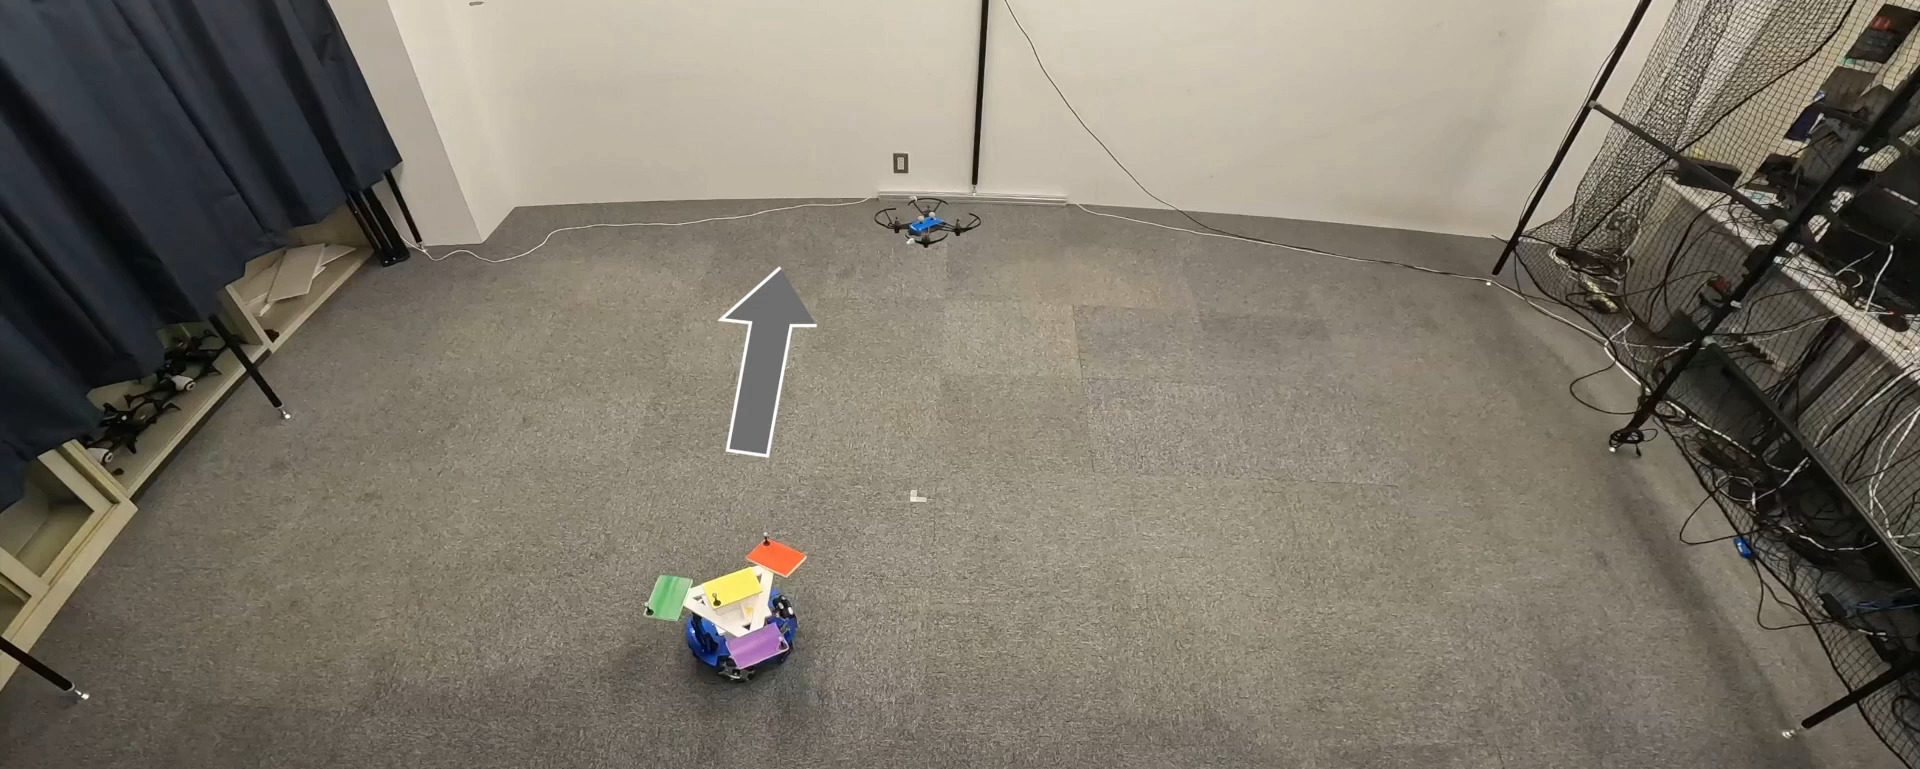 Drone following a land-robot